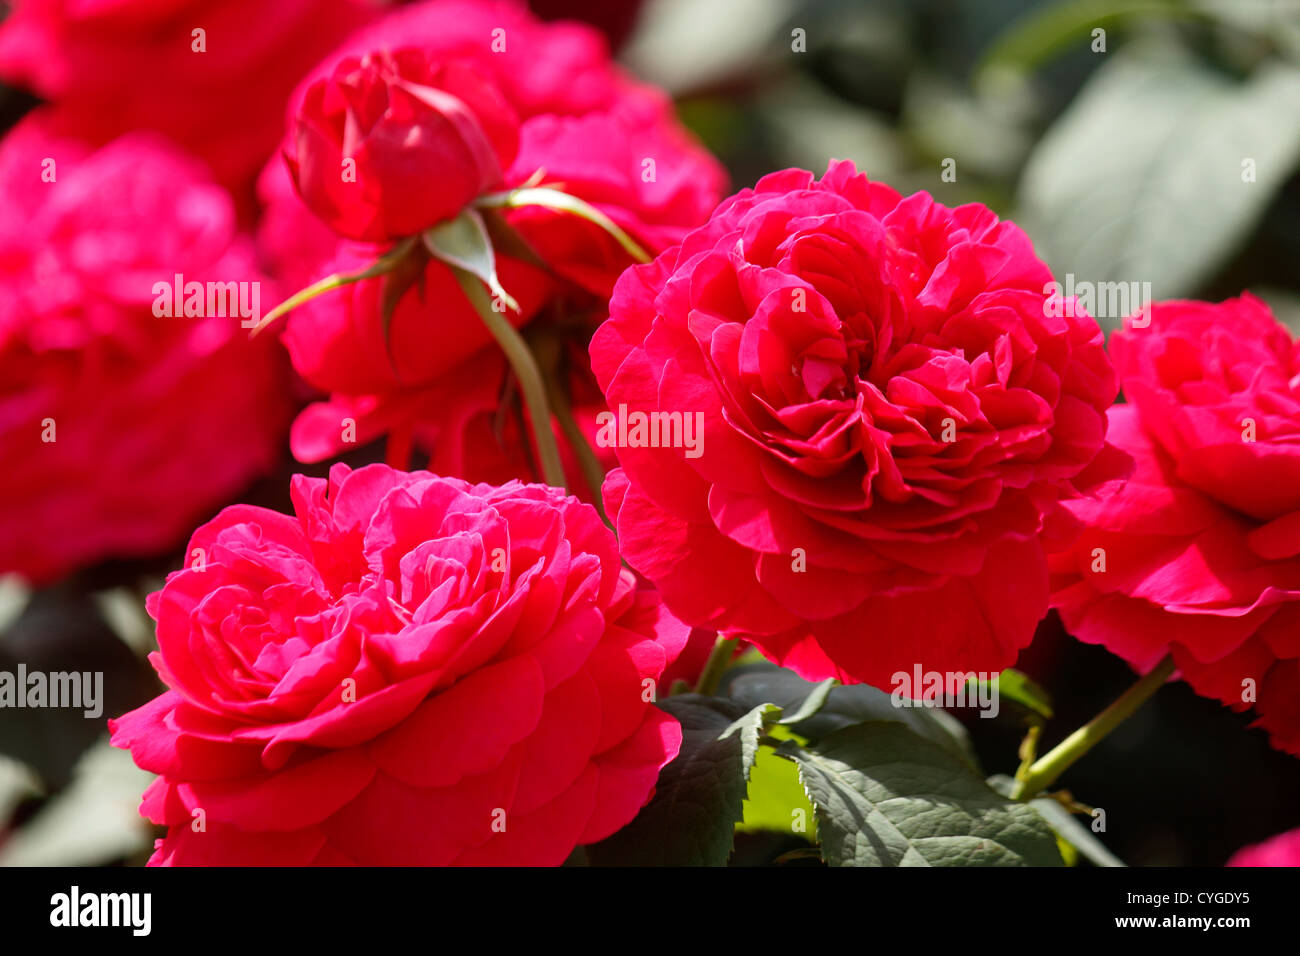 Red rose garden Stock Photo